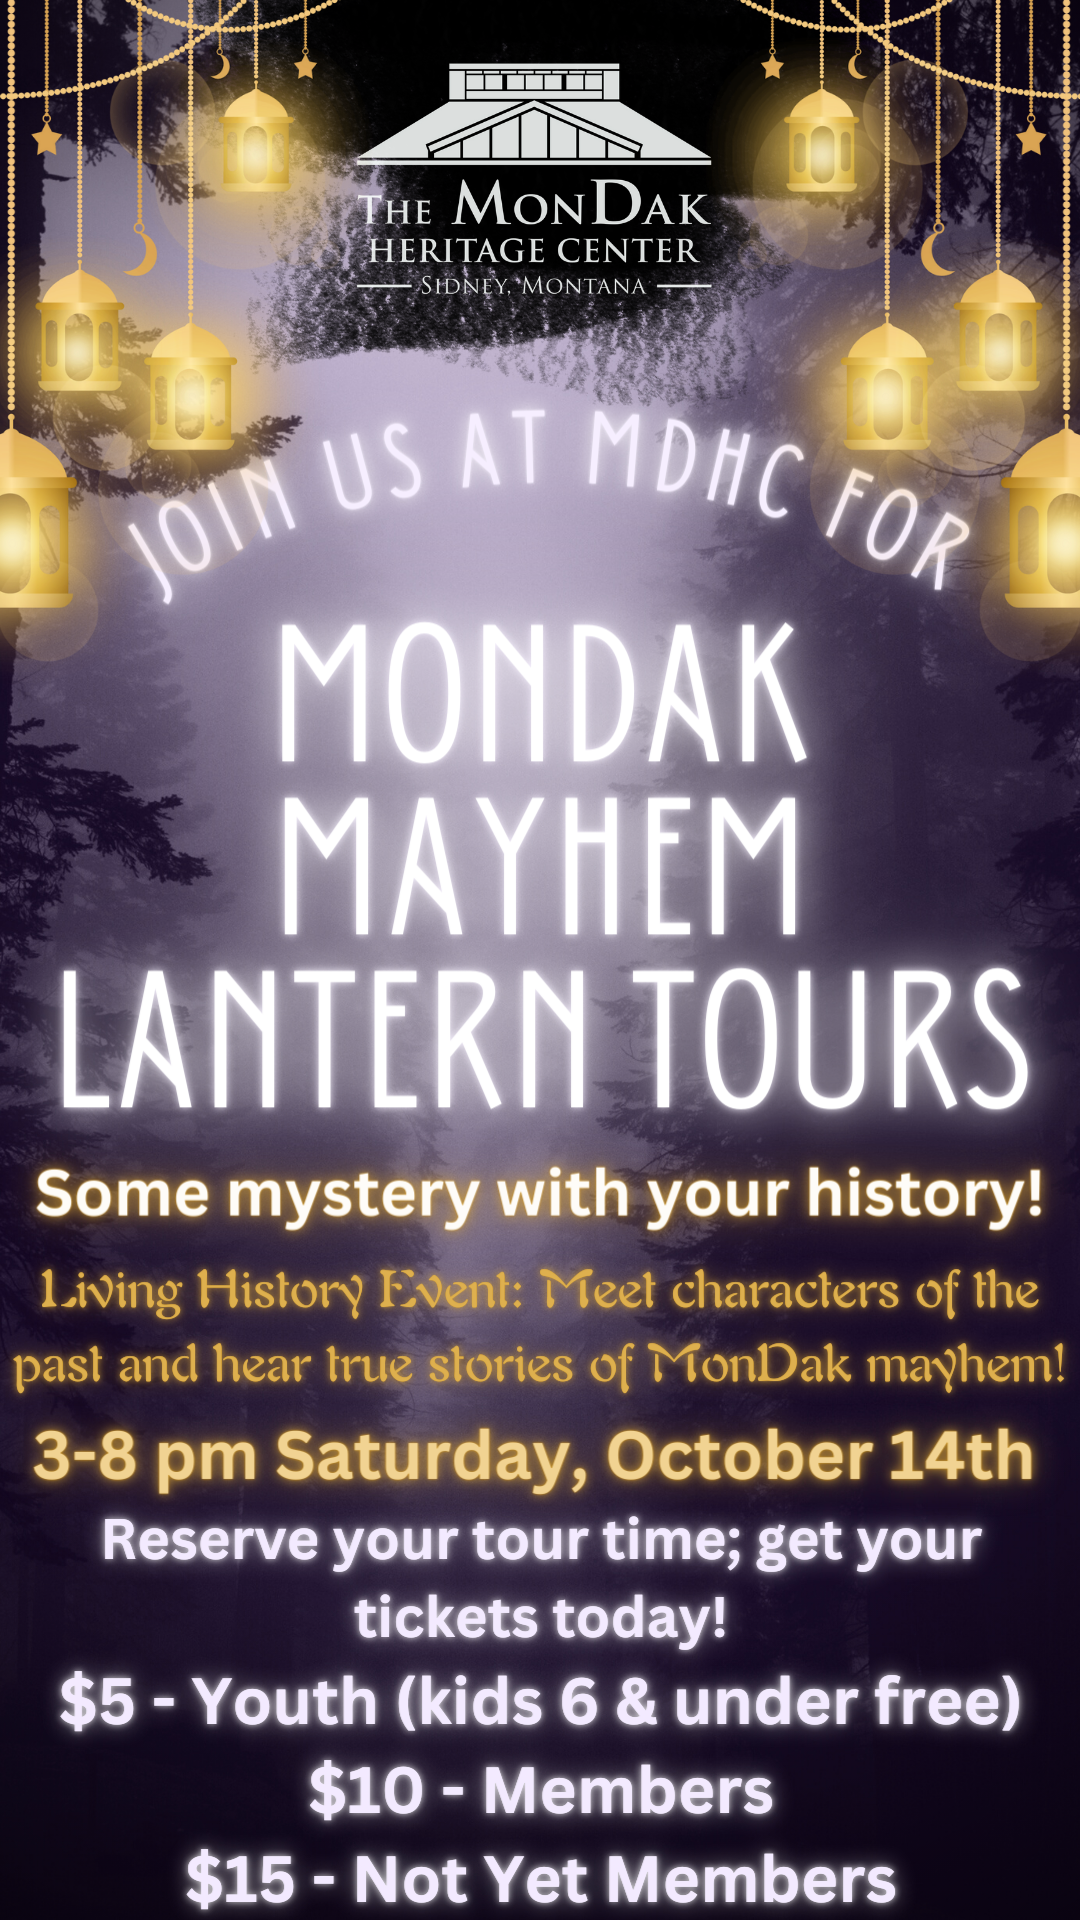 MonDak Mayhem Lantern Tours